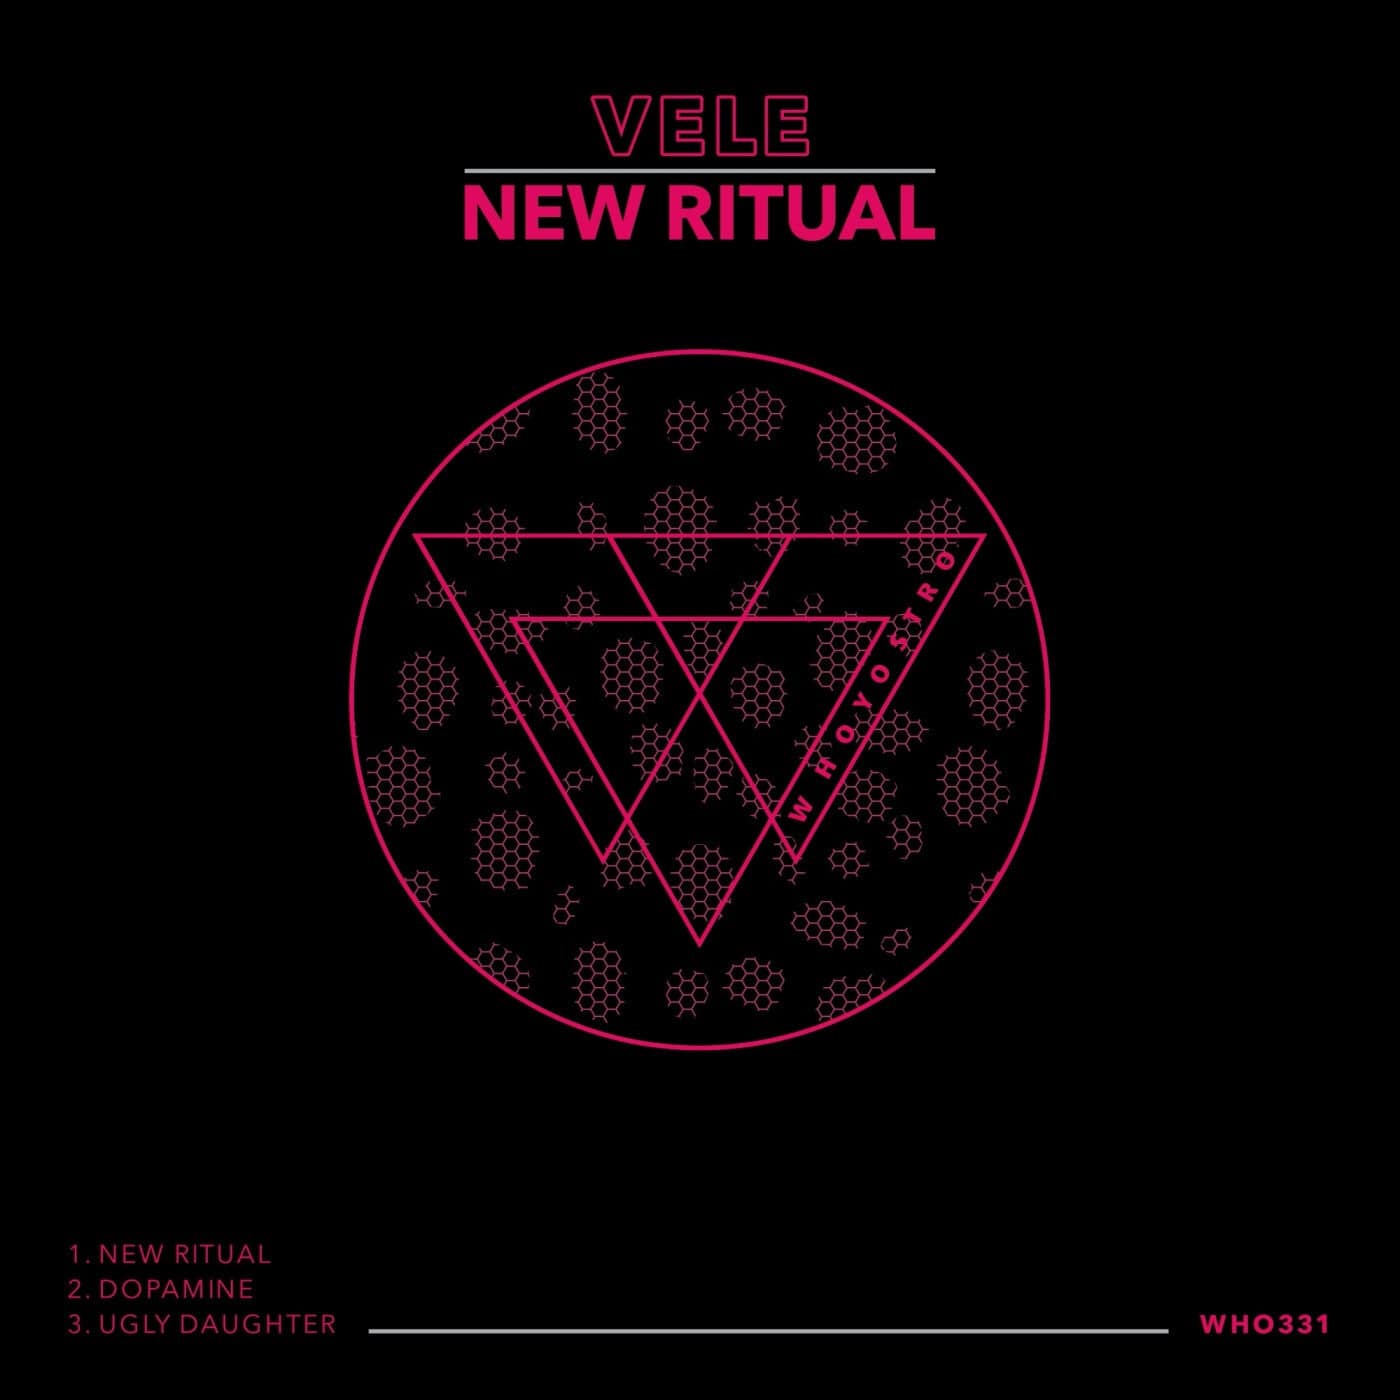 image cover: Vele - New Ritual / WHO331